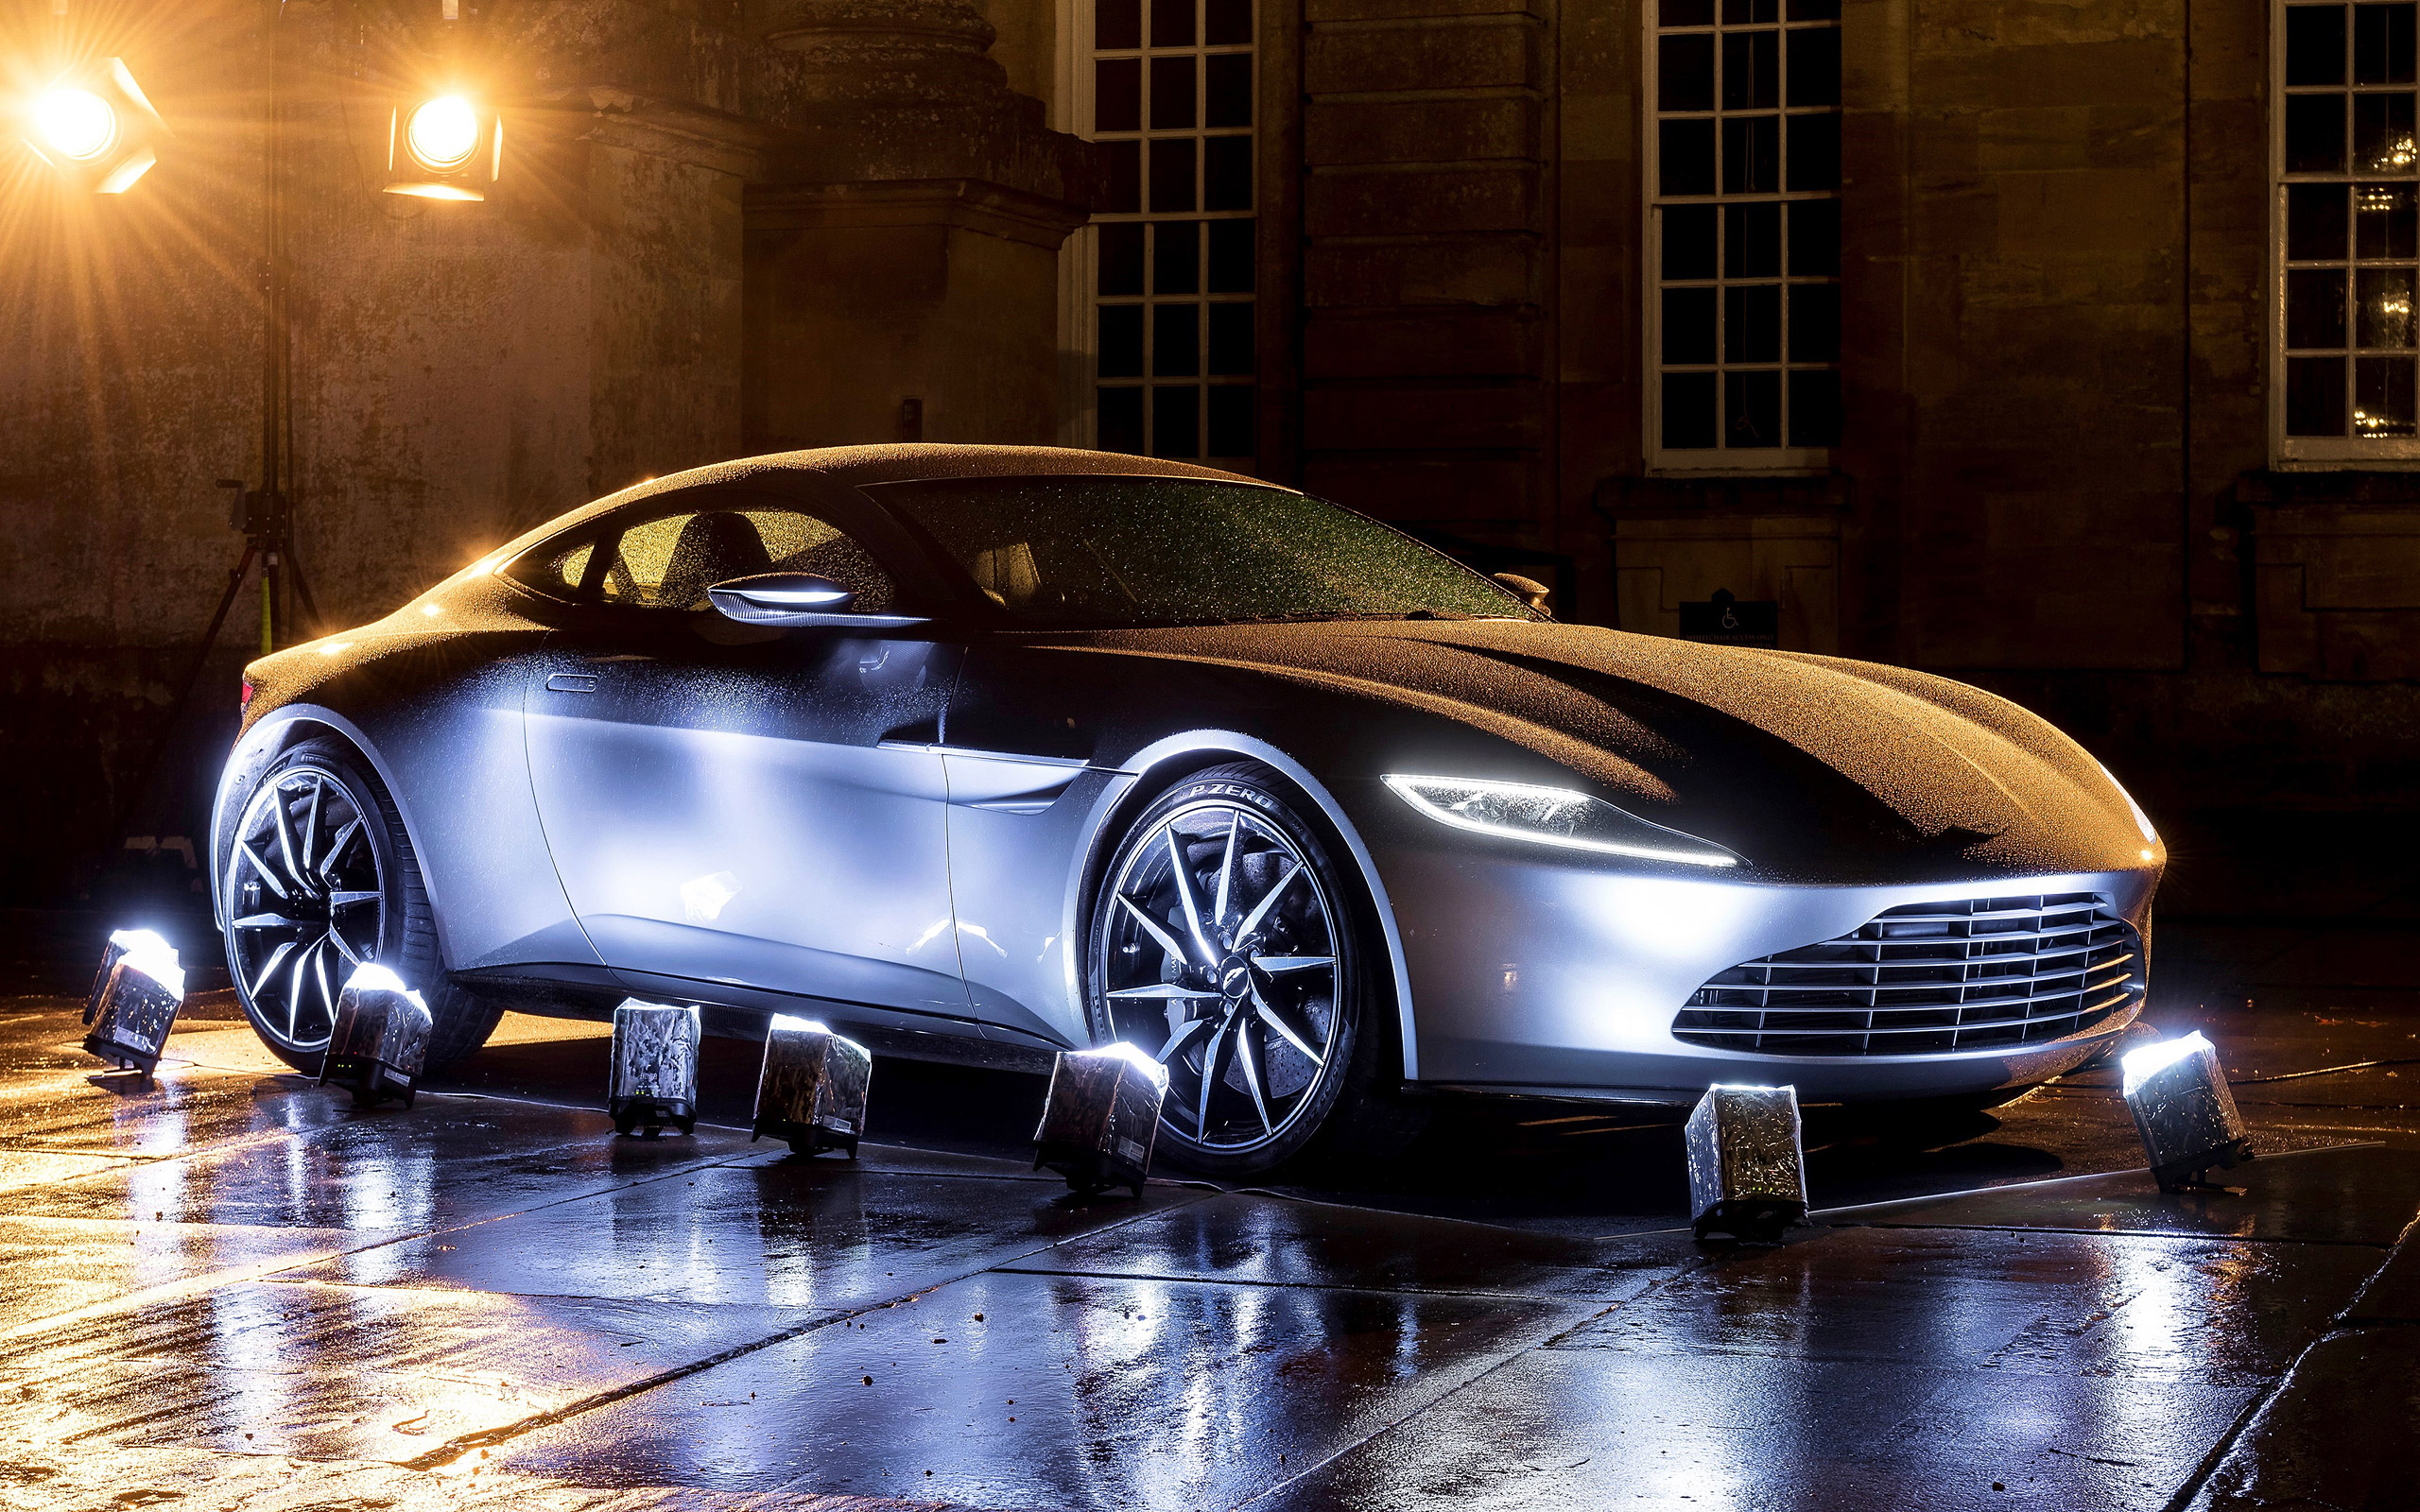 The Ultimate Driving Machine: The Aston Martin DB10 Spectre